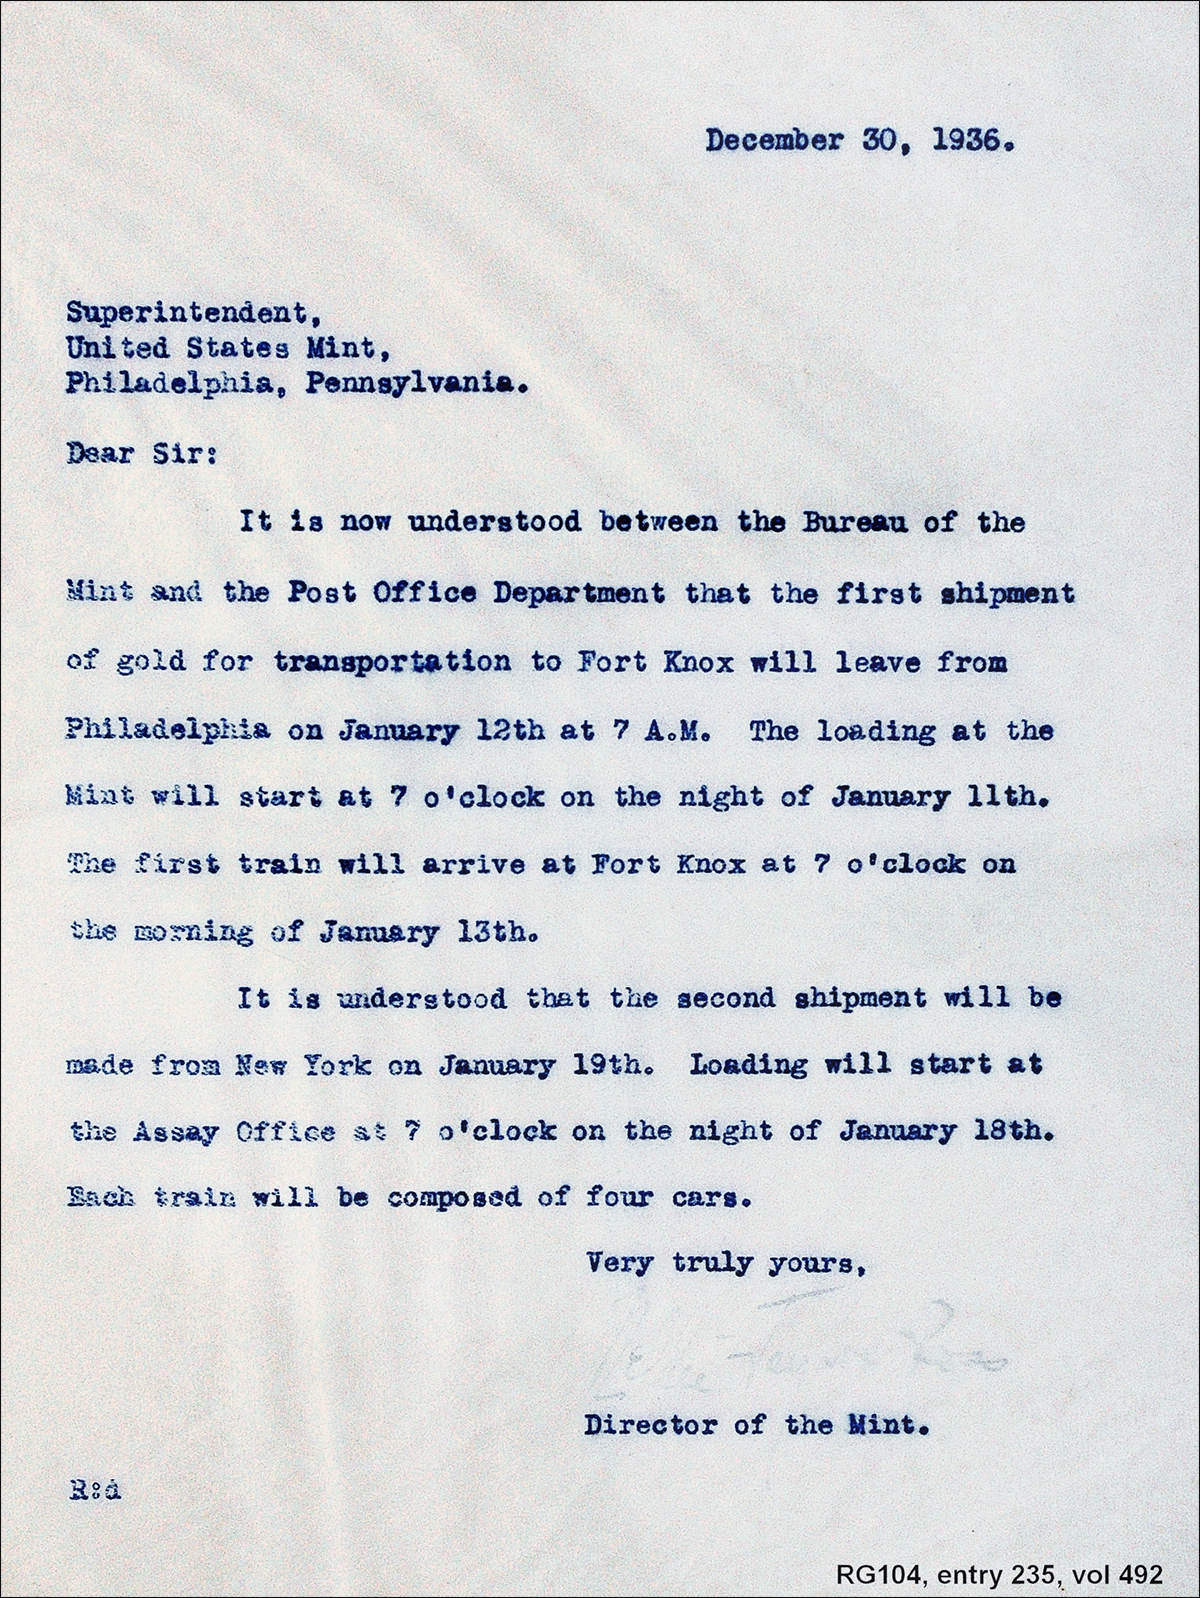 Mint Letter Dated December 30, 1936.